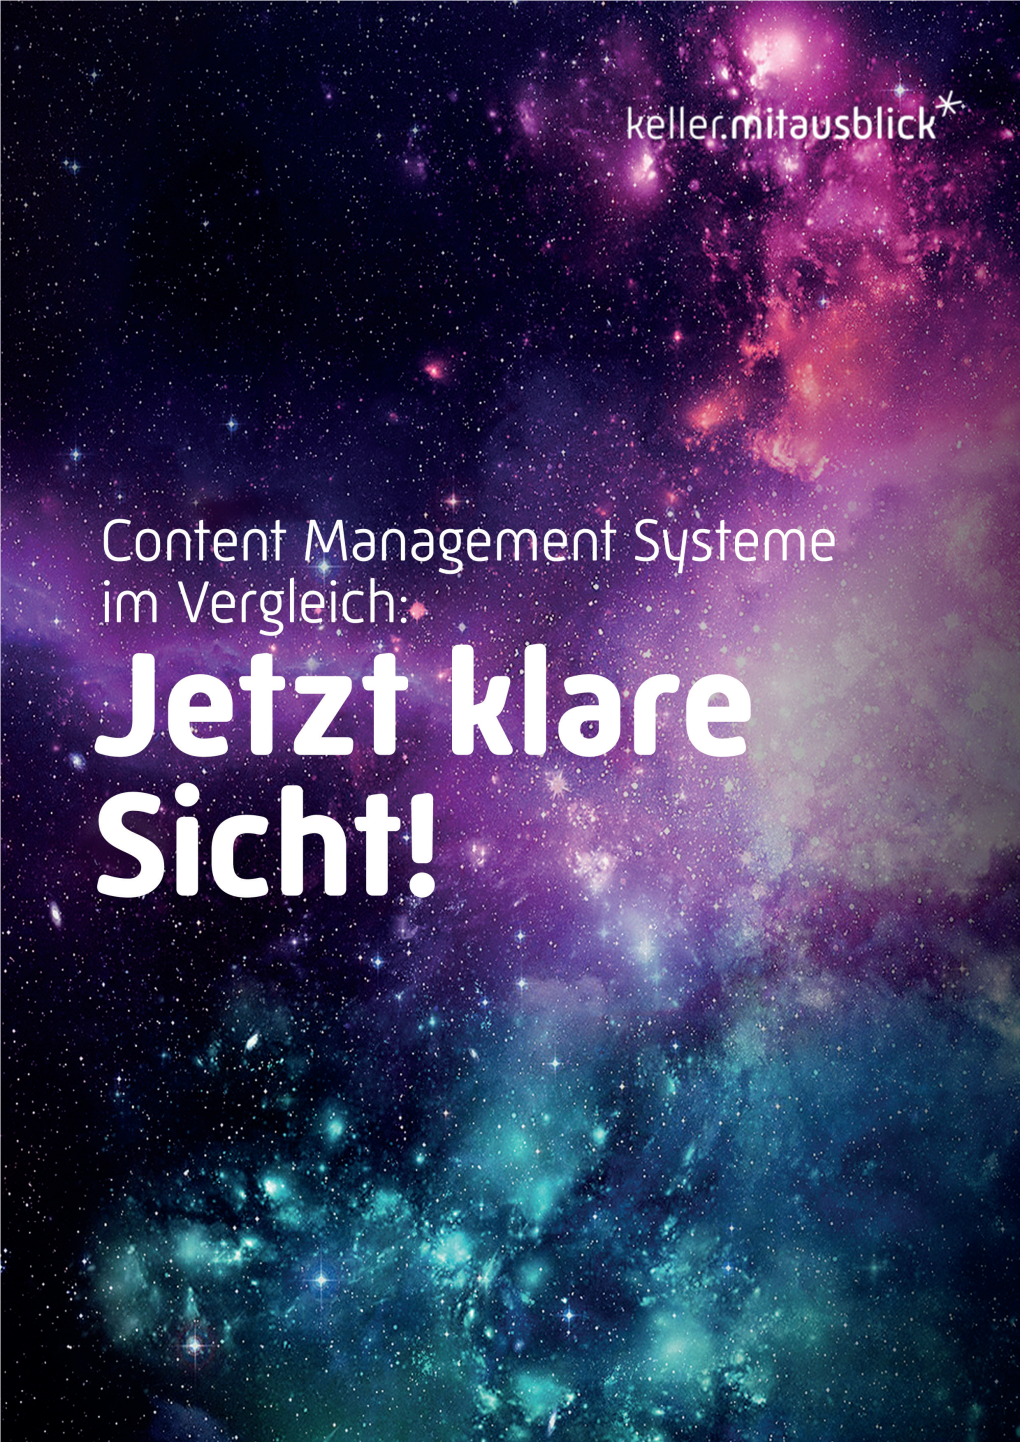 Content Management Systeme (CMS) Geeignet